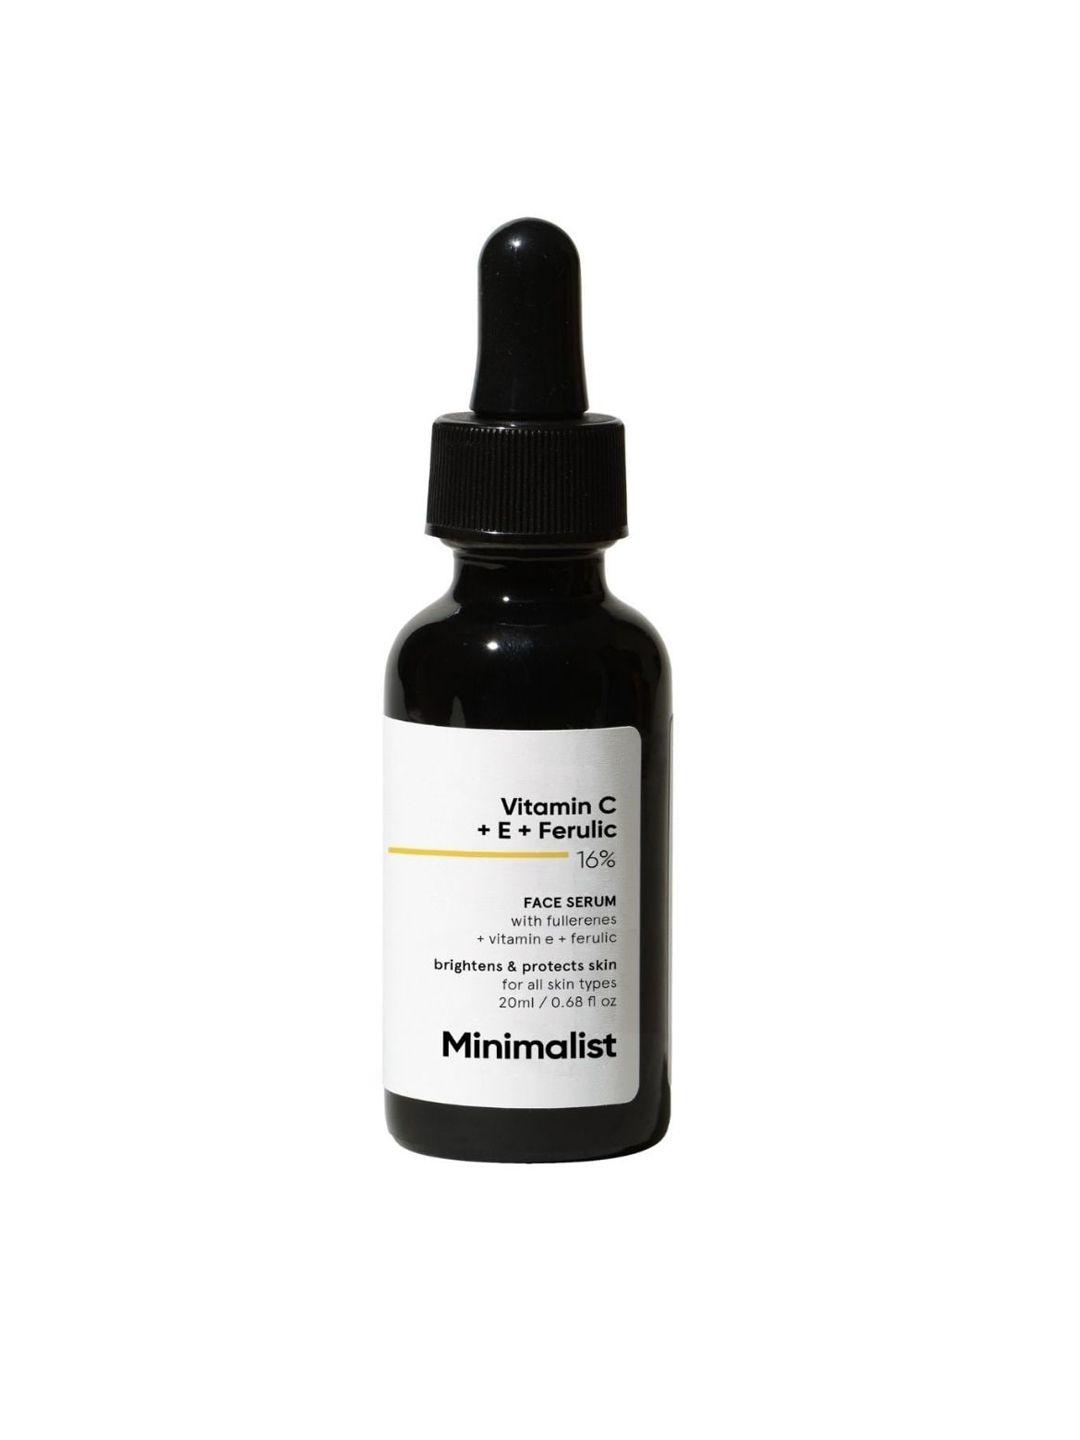 Minimalist 16% Vitamin C Face Serum with Vitamin E & Ferulic Acid for Brightening - 20ml